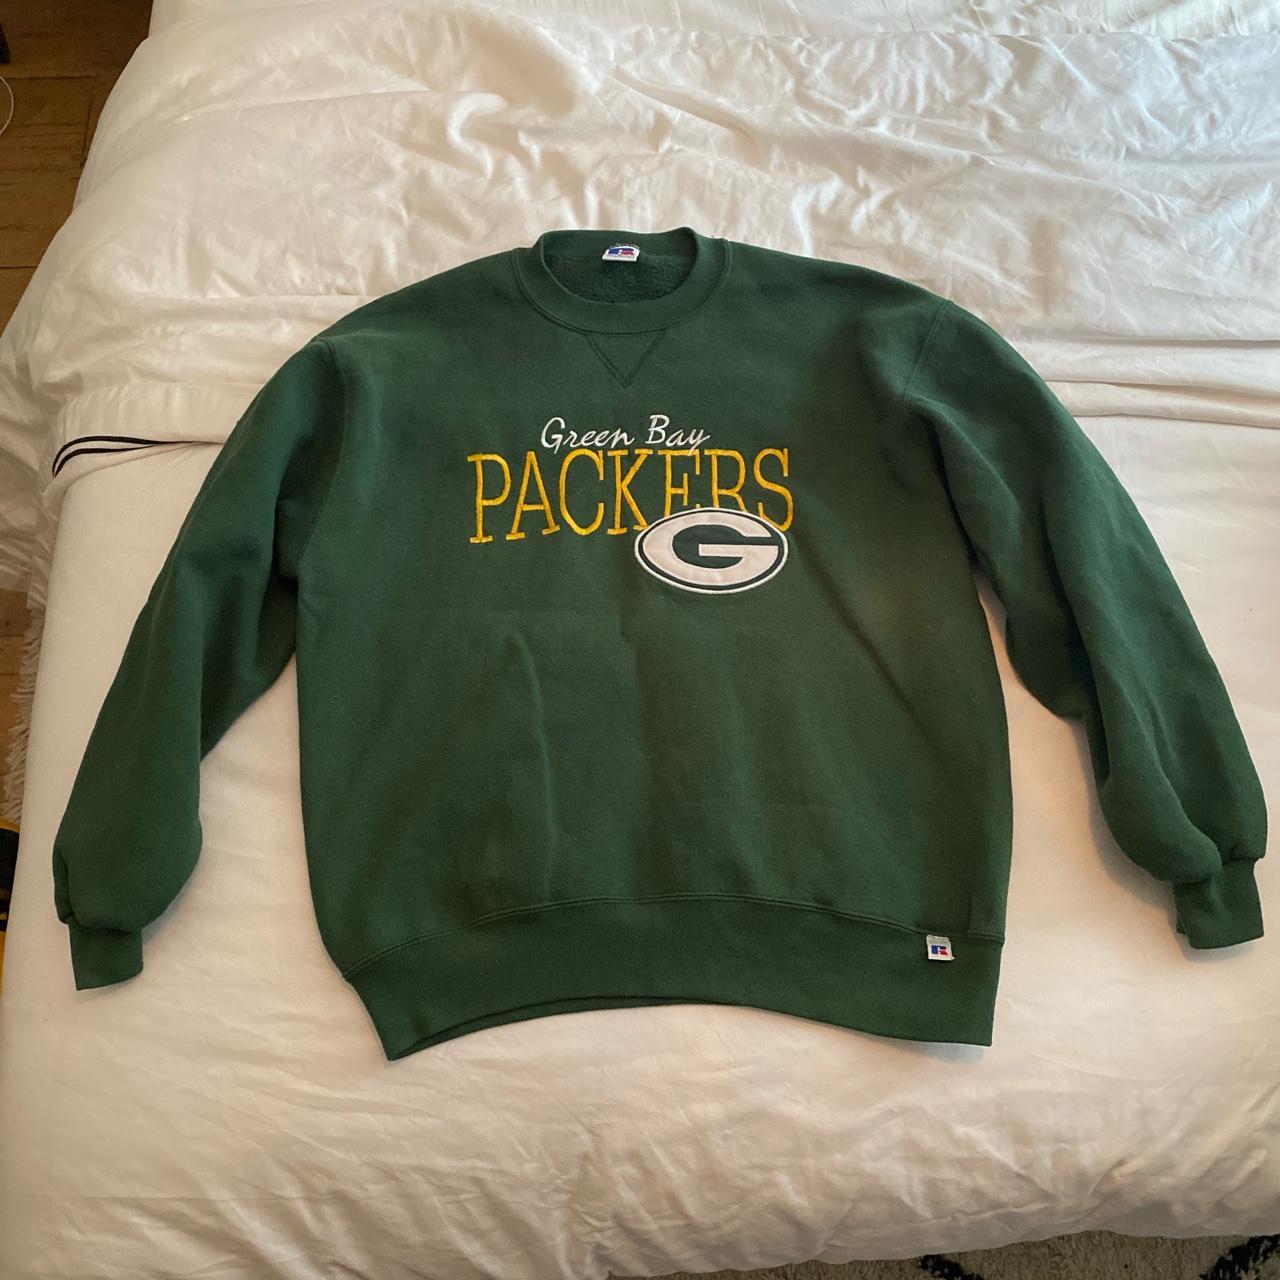 Green Bay Packers Retro Sweatshirt. Size L - fits... - Depop